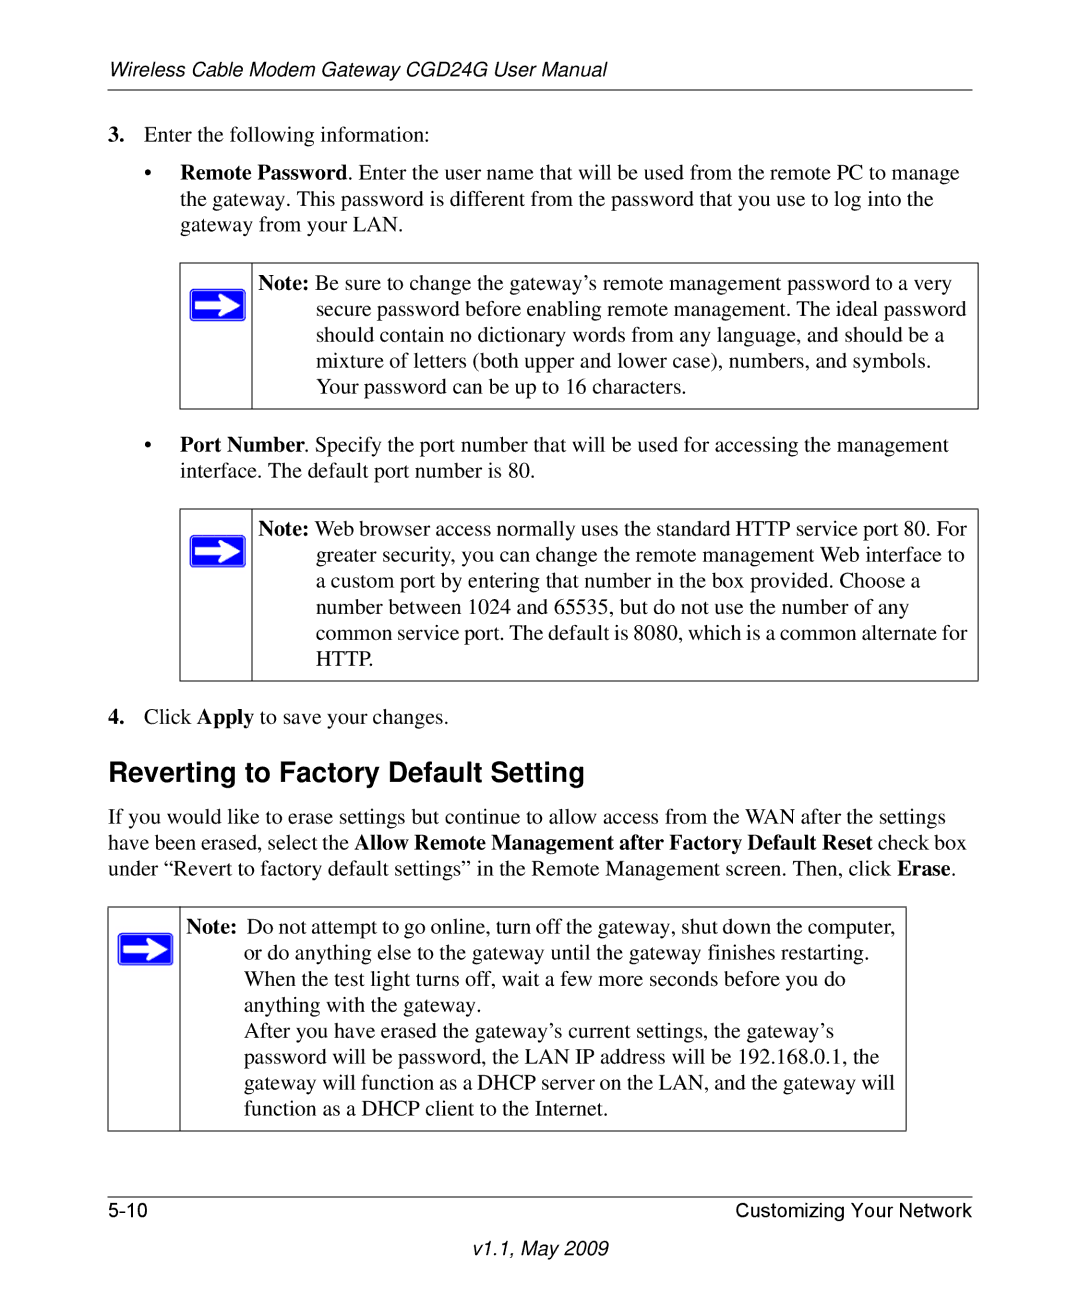 Gateway CGD24G user manual Reverting to Factory Default Setting 